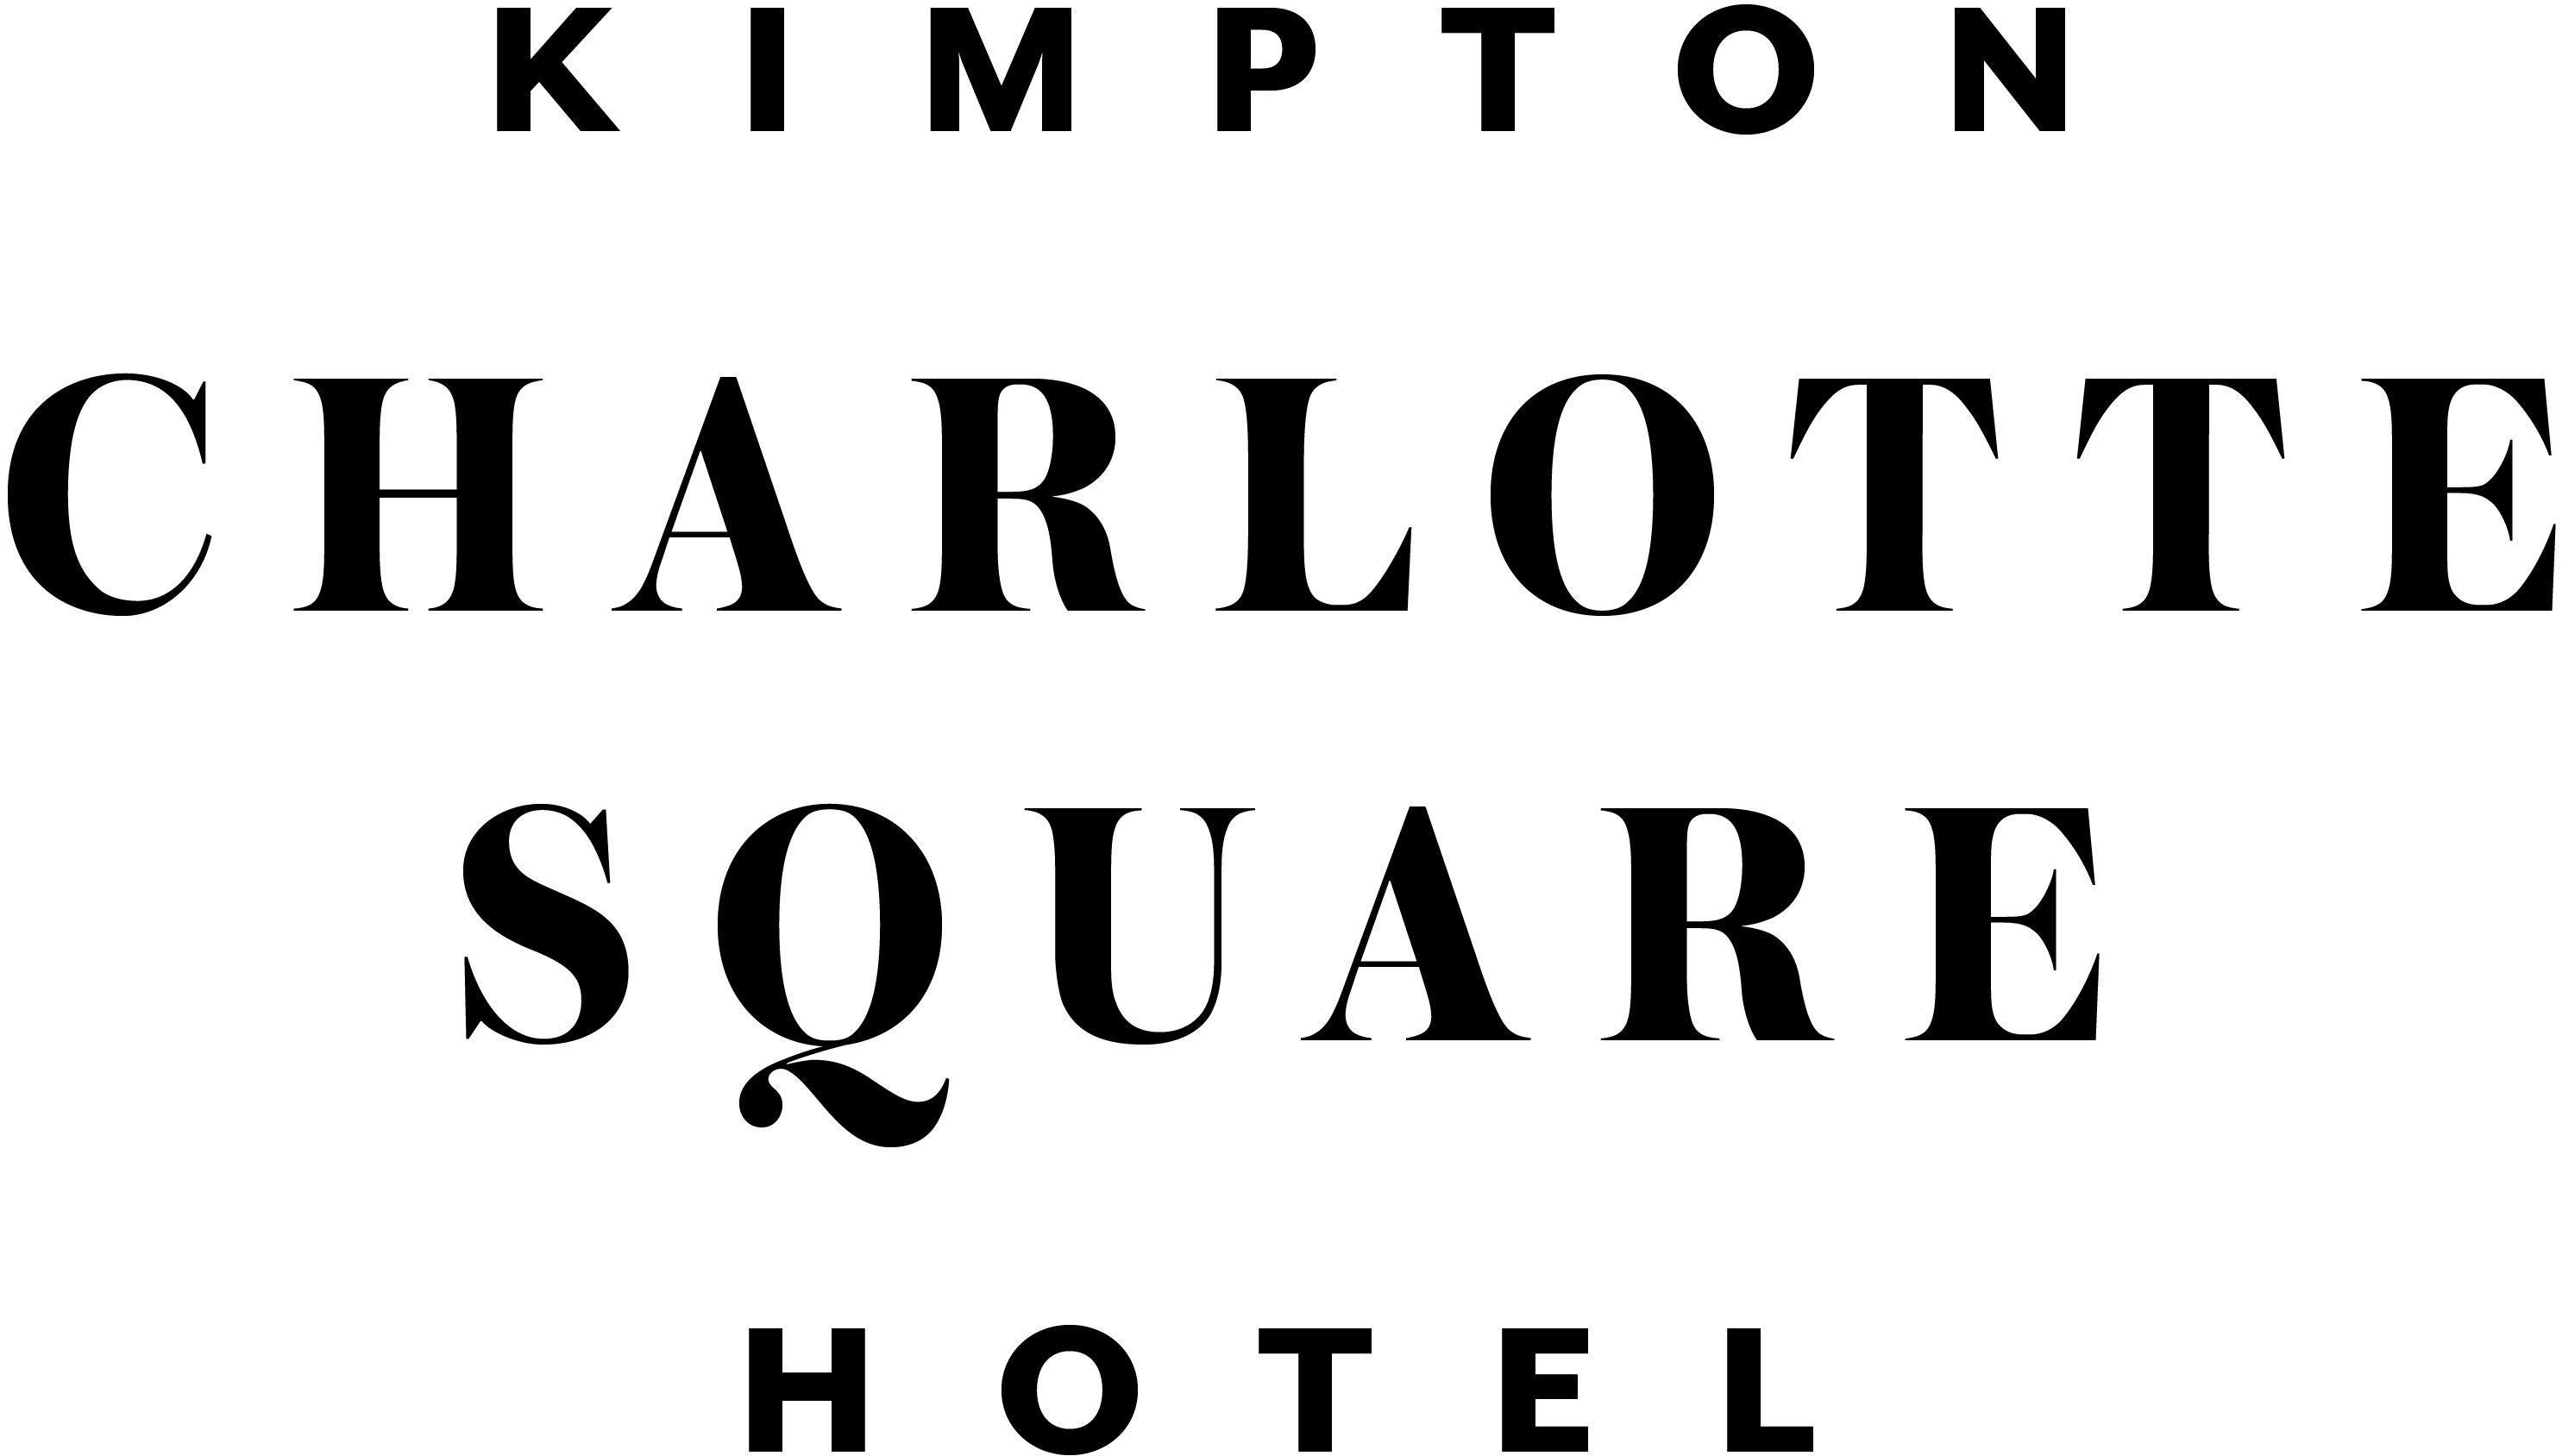 Kimpton Charlotte Square Hotel, The Gallery 2 photo #2